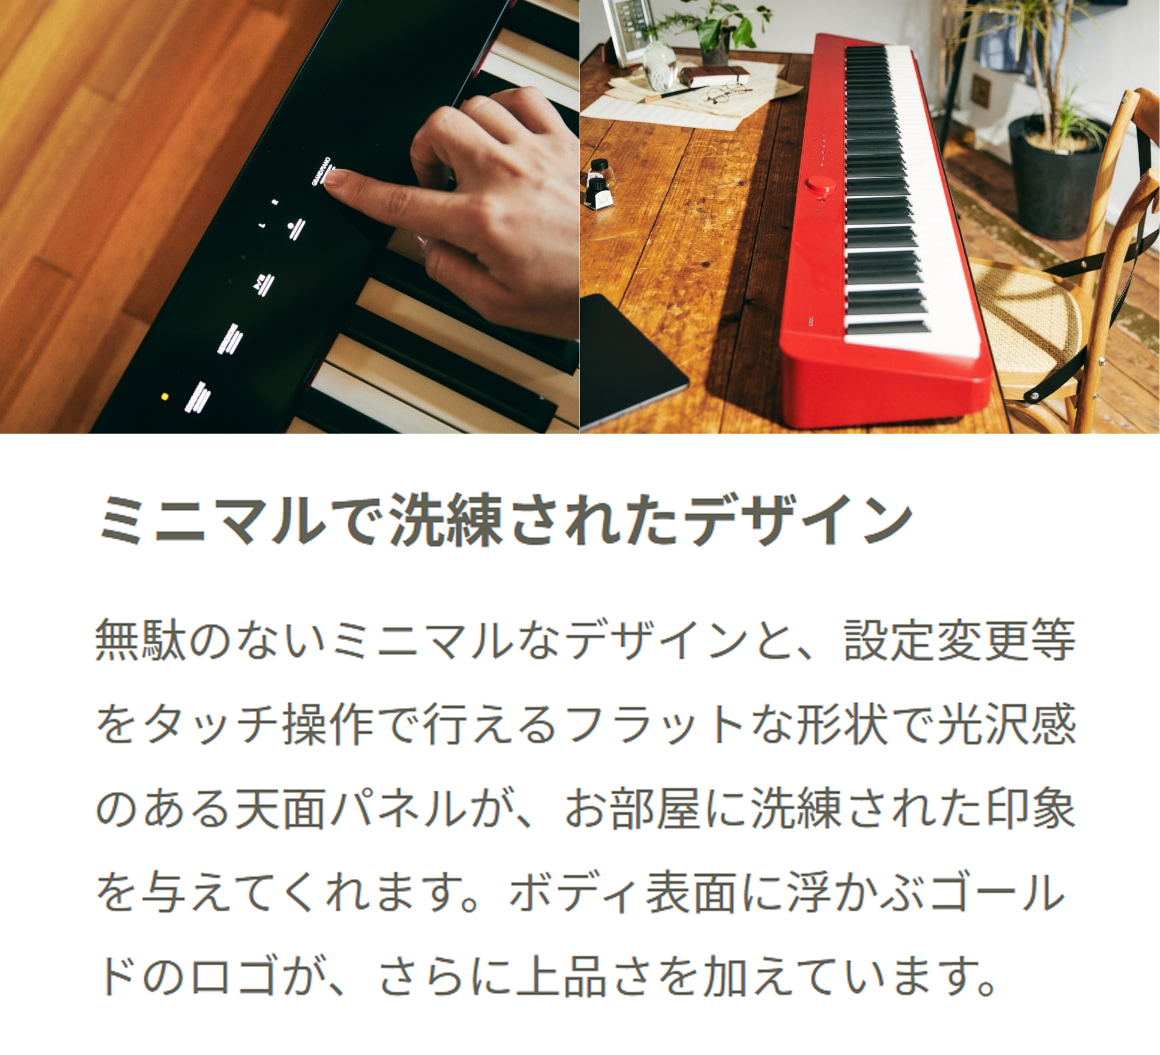 CASIO PX-S1100 BK ブラック 電子ピアノ 88鍵盤 ヘッドホン・Xスタンド 